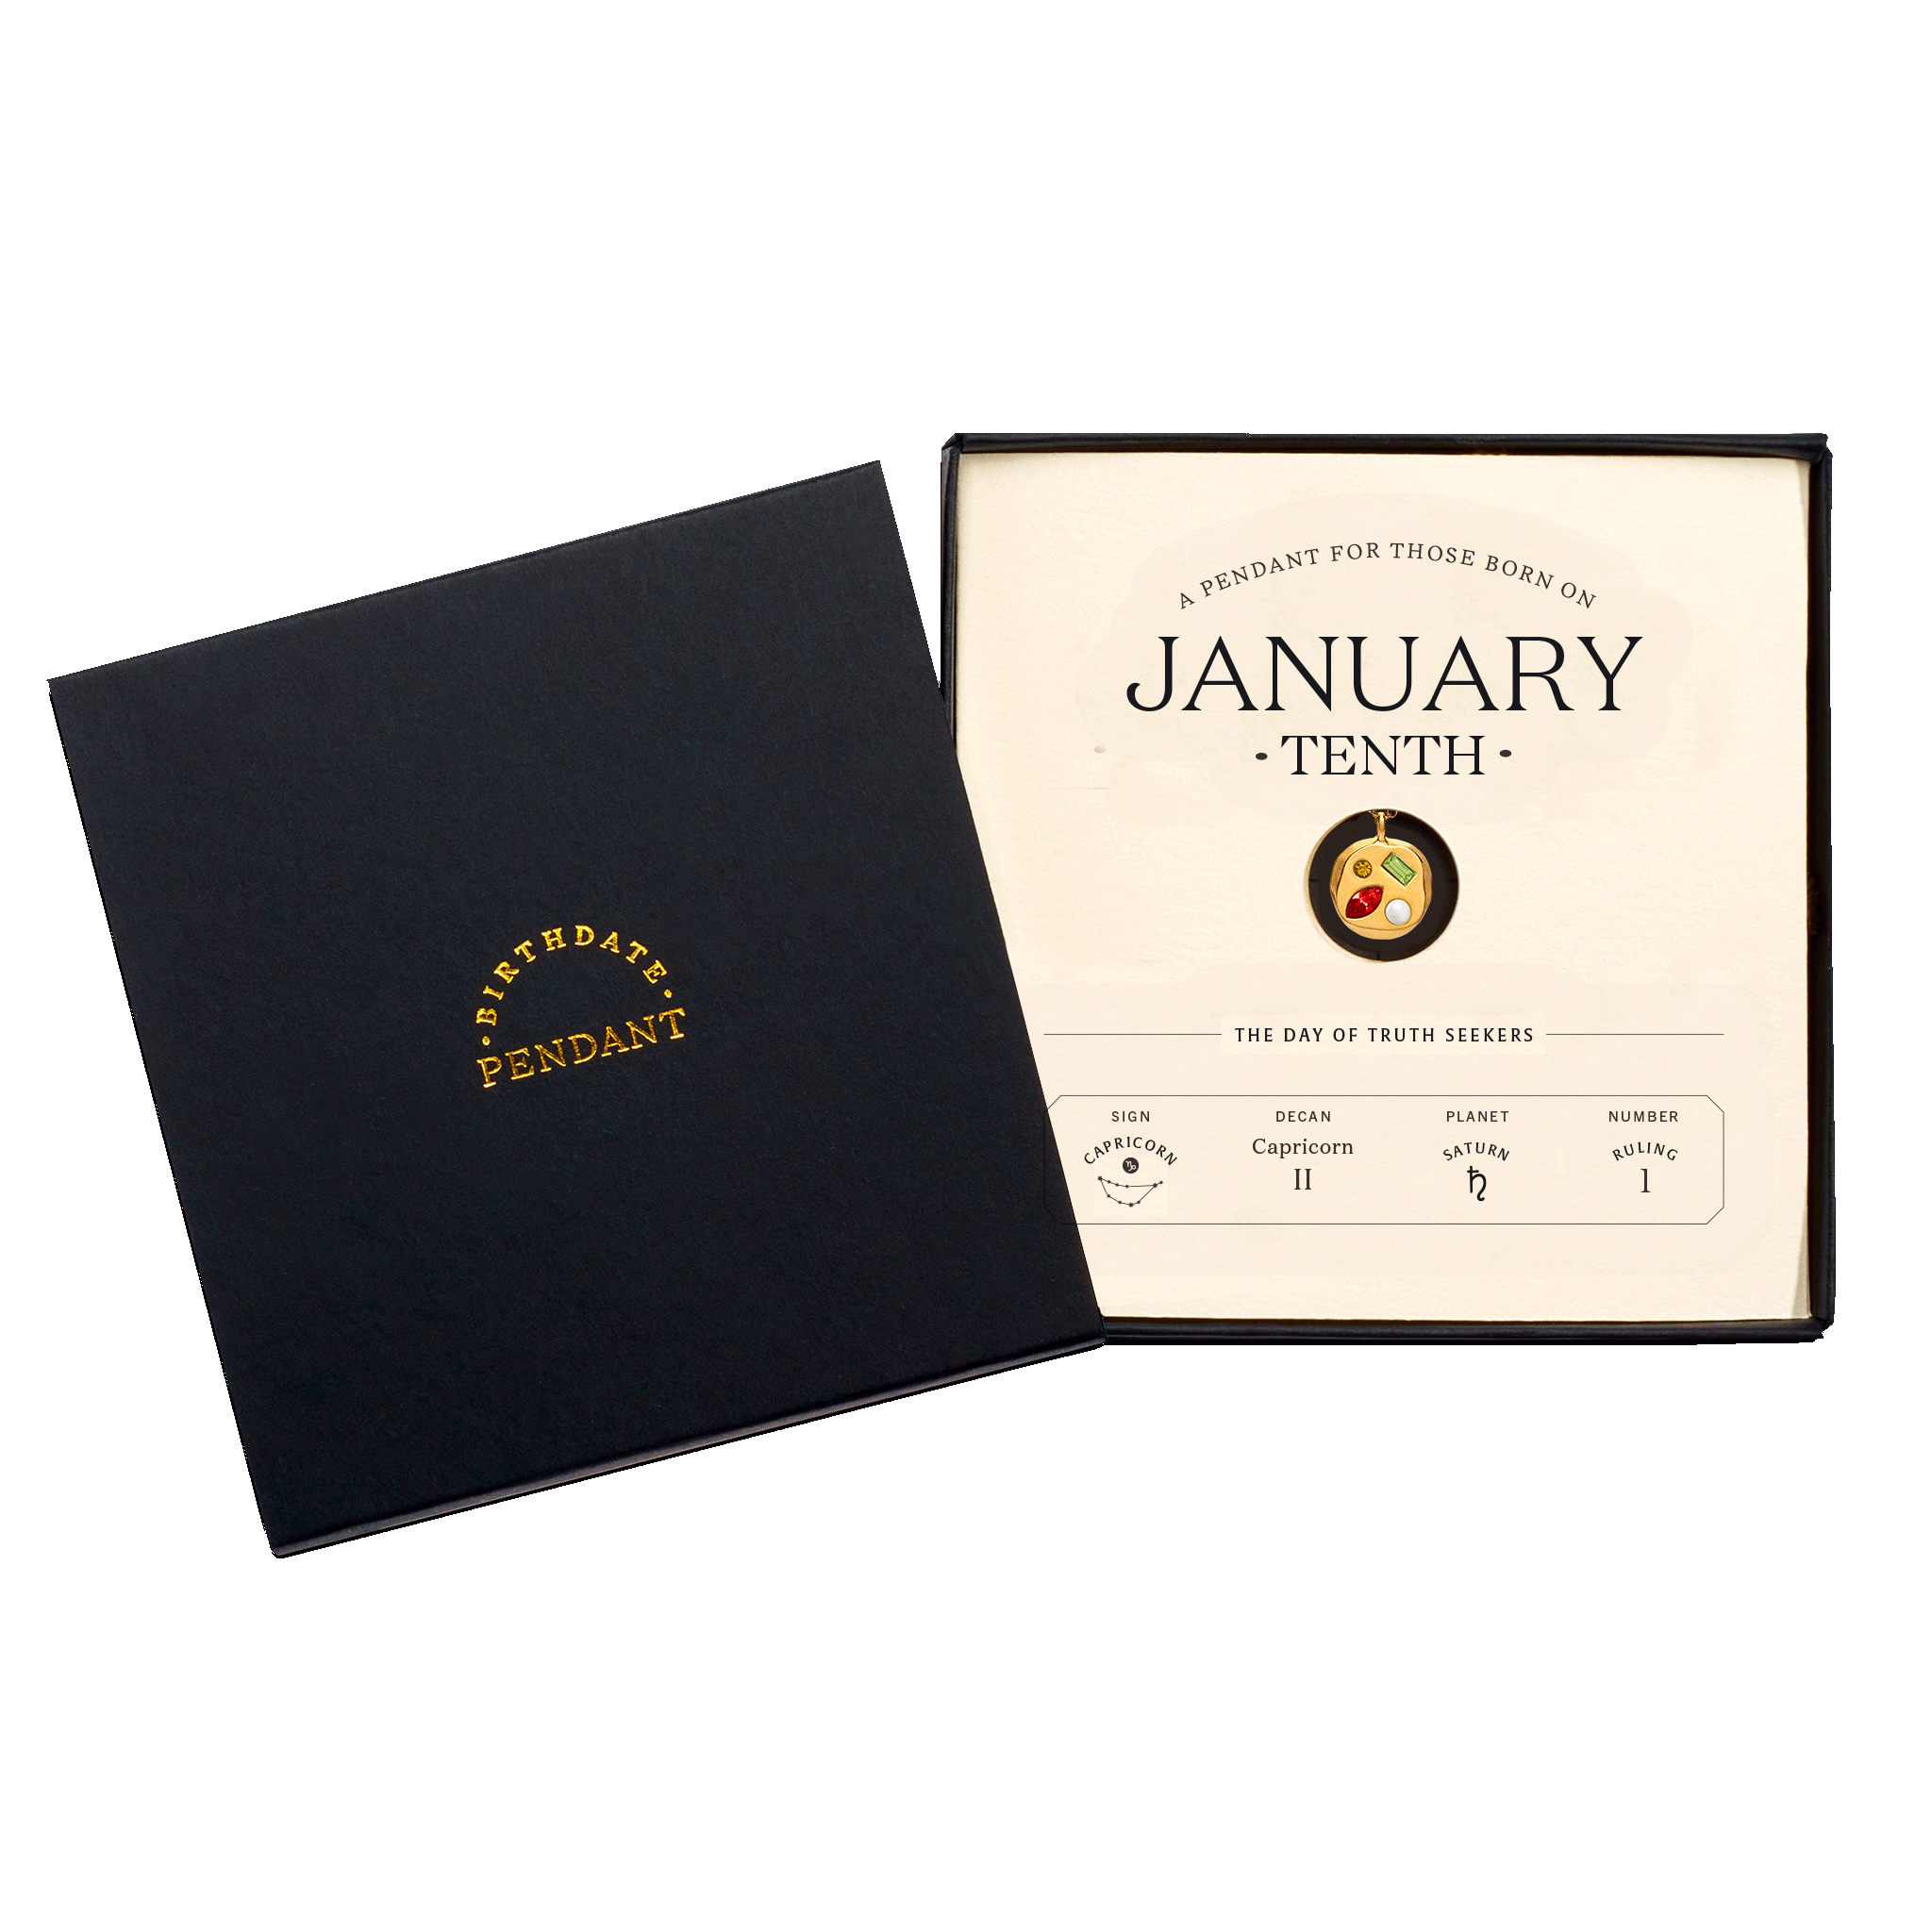 The January Tenth Pendant inside its box